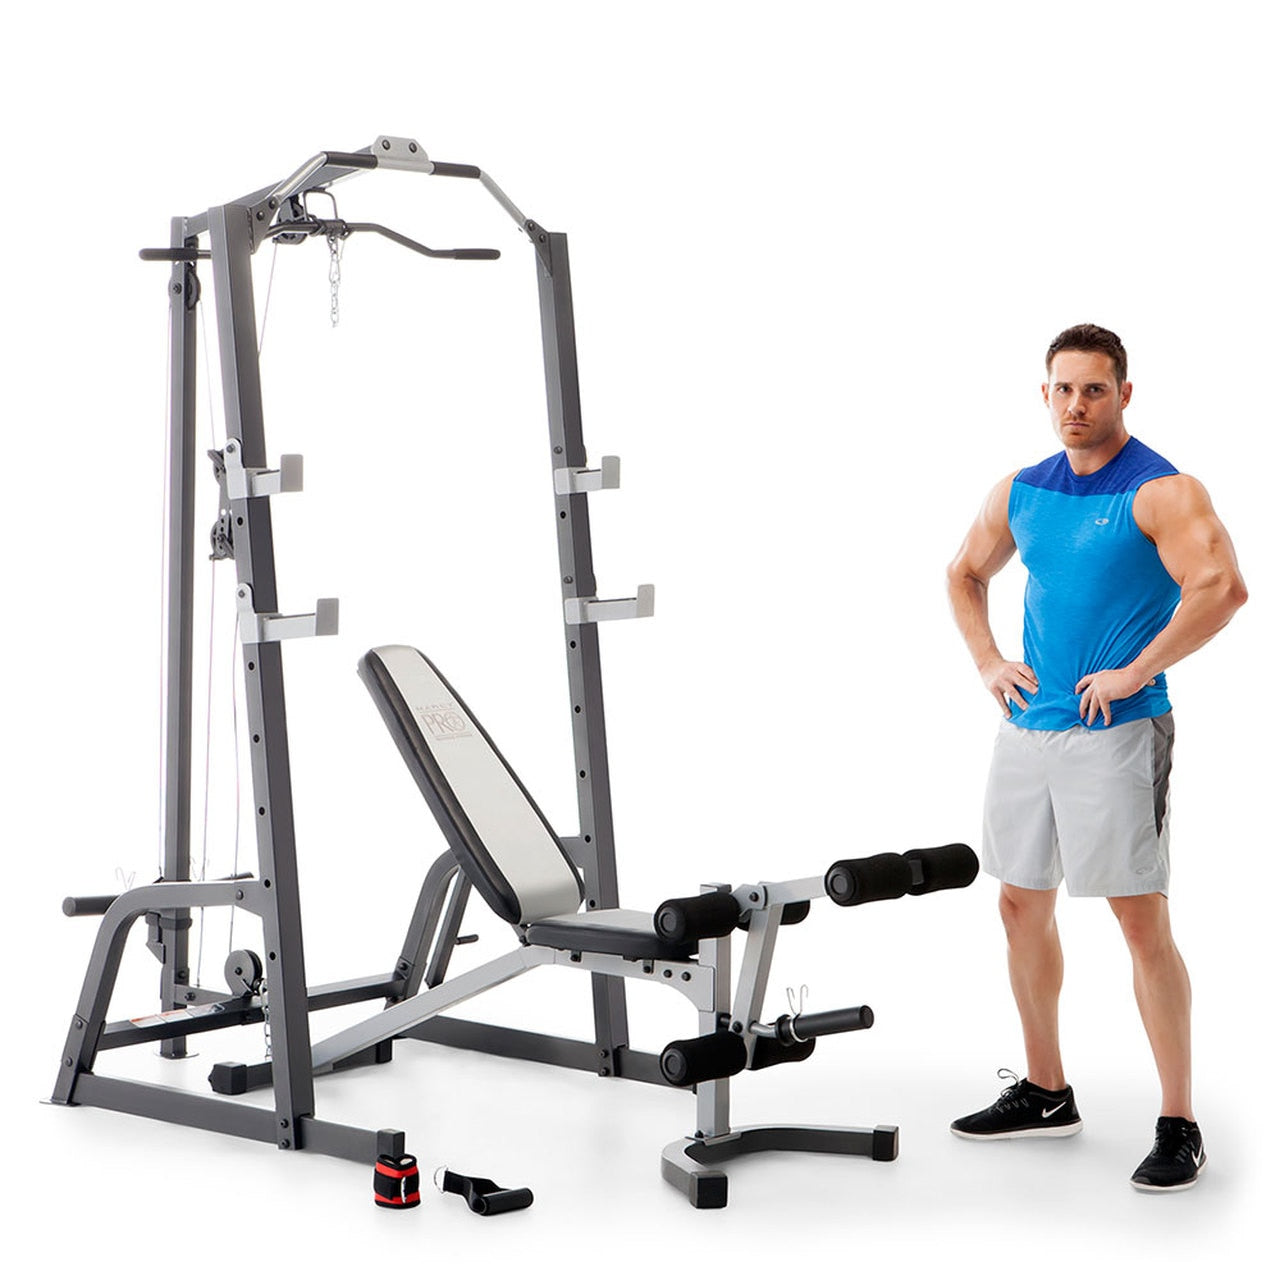 Brand New Gold's Gym Platinum Home Gym Includes Smith Machine Bench & Rack